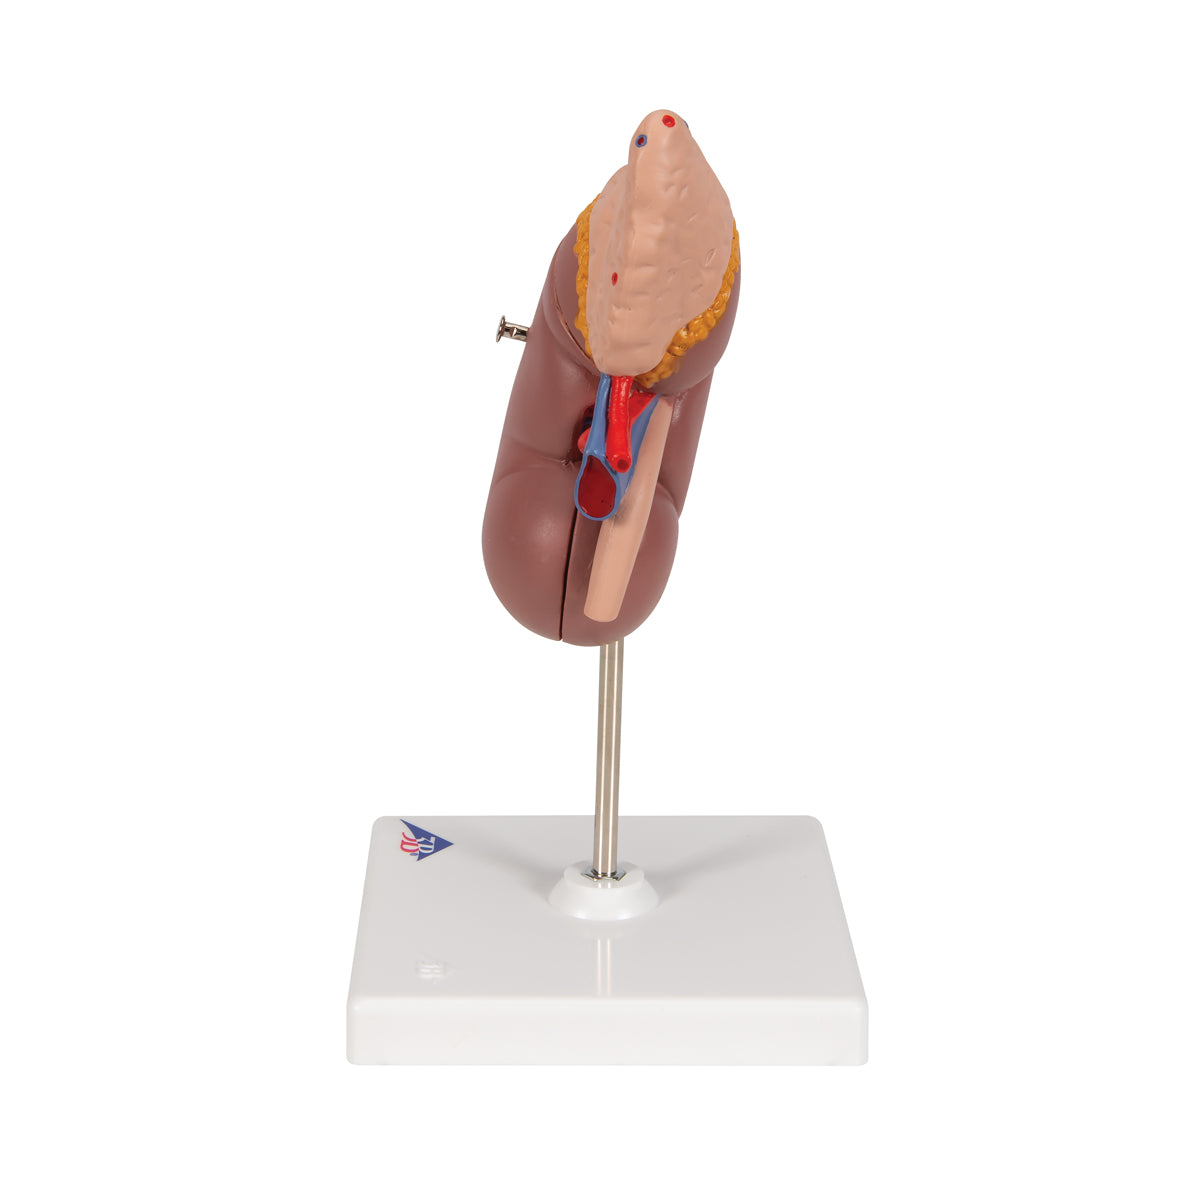 Klassisk njurmodell inkl. binjuren där njuren kan separeras i 2 delar